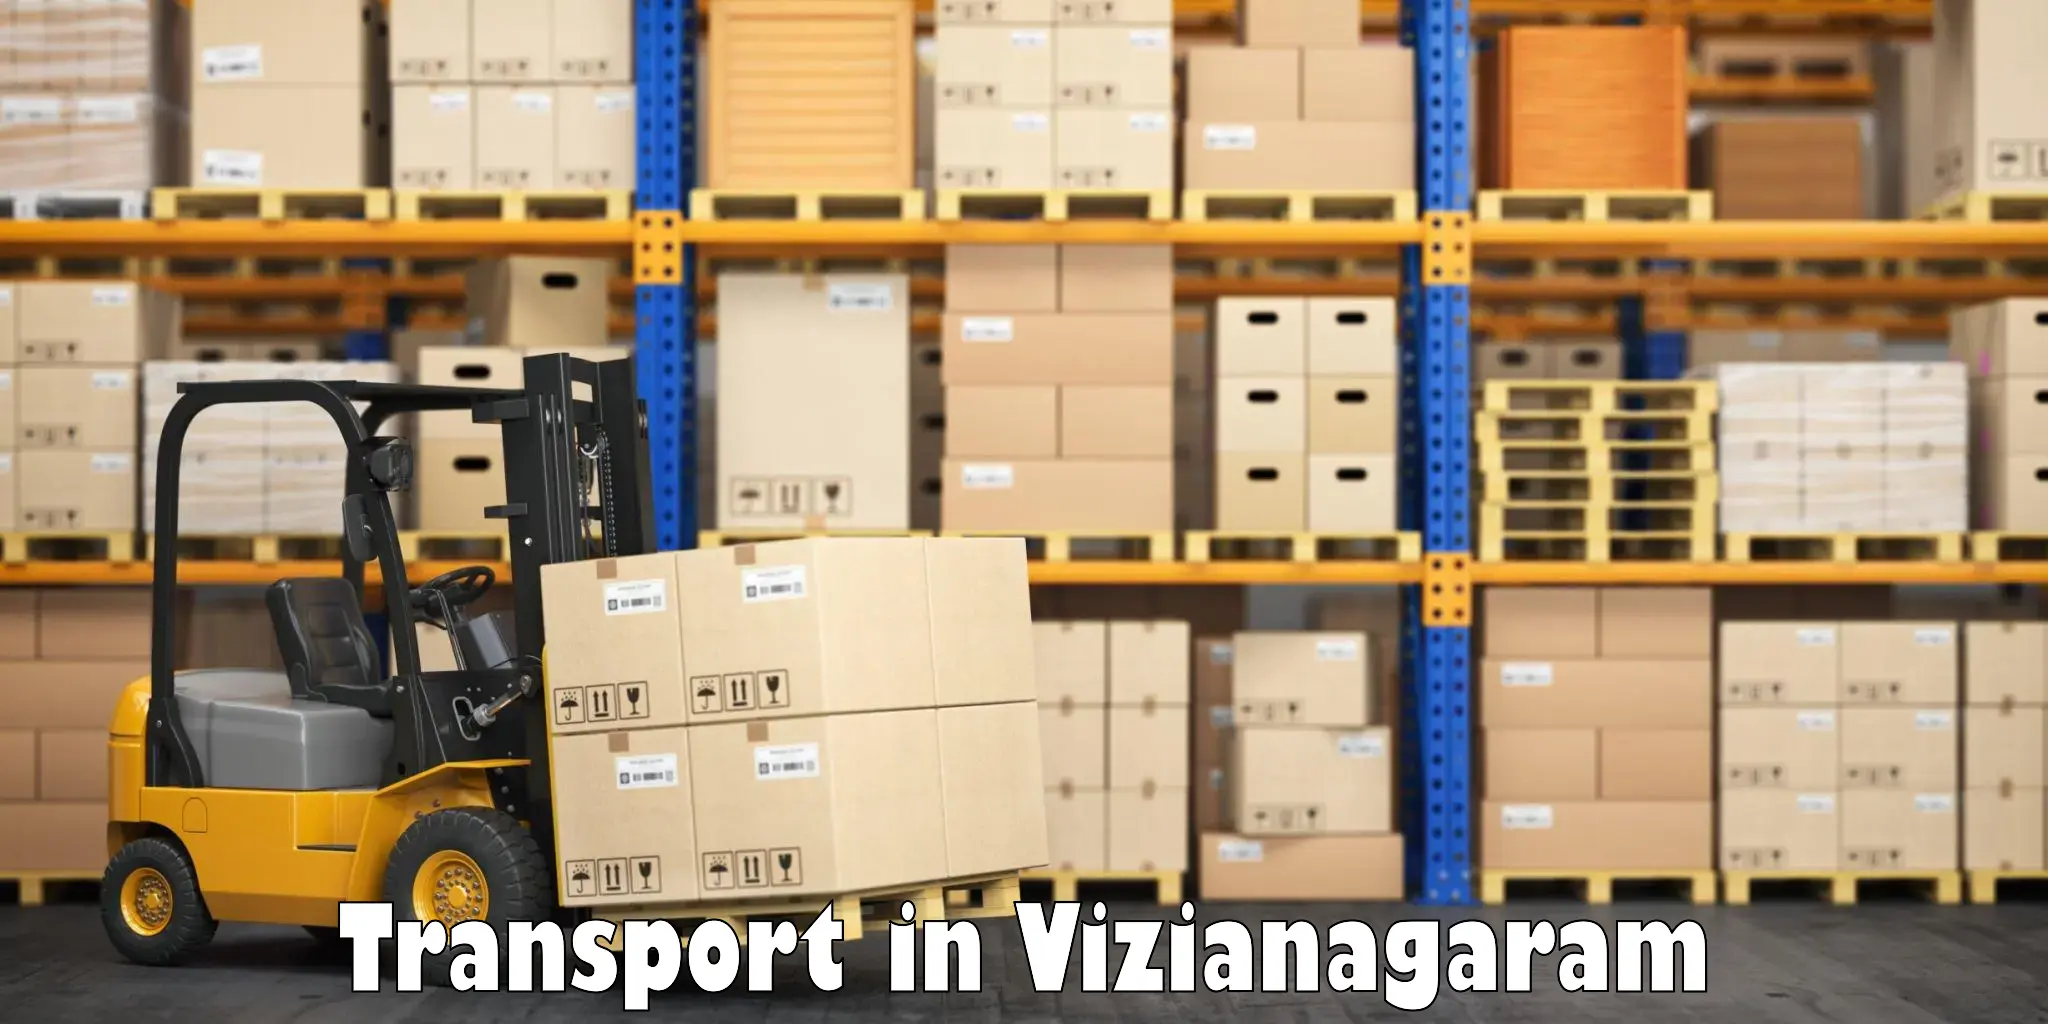 Air freight transport services in Vizianagaram